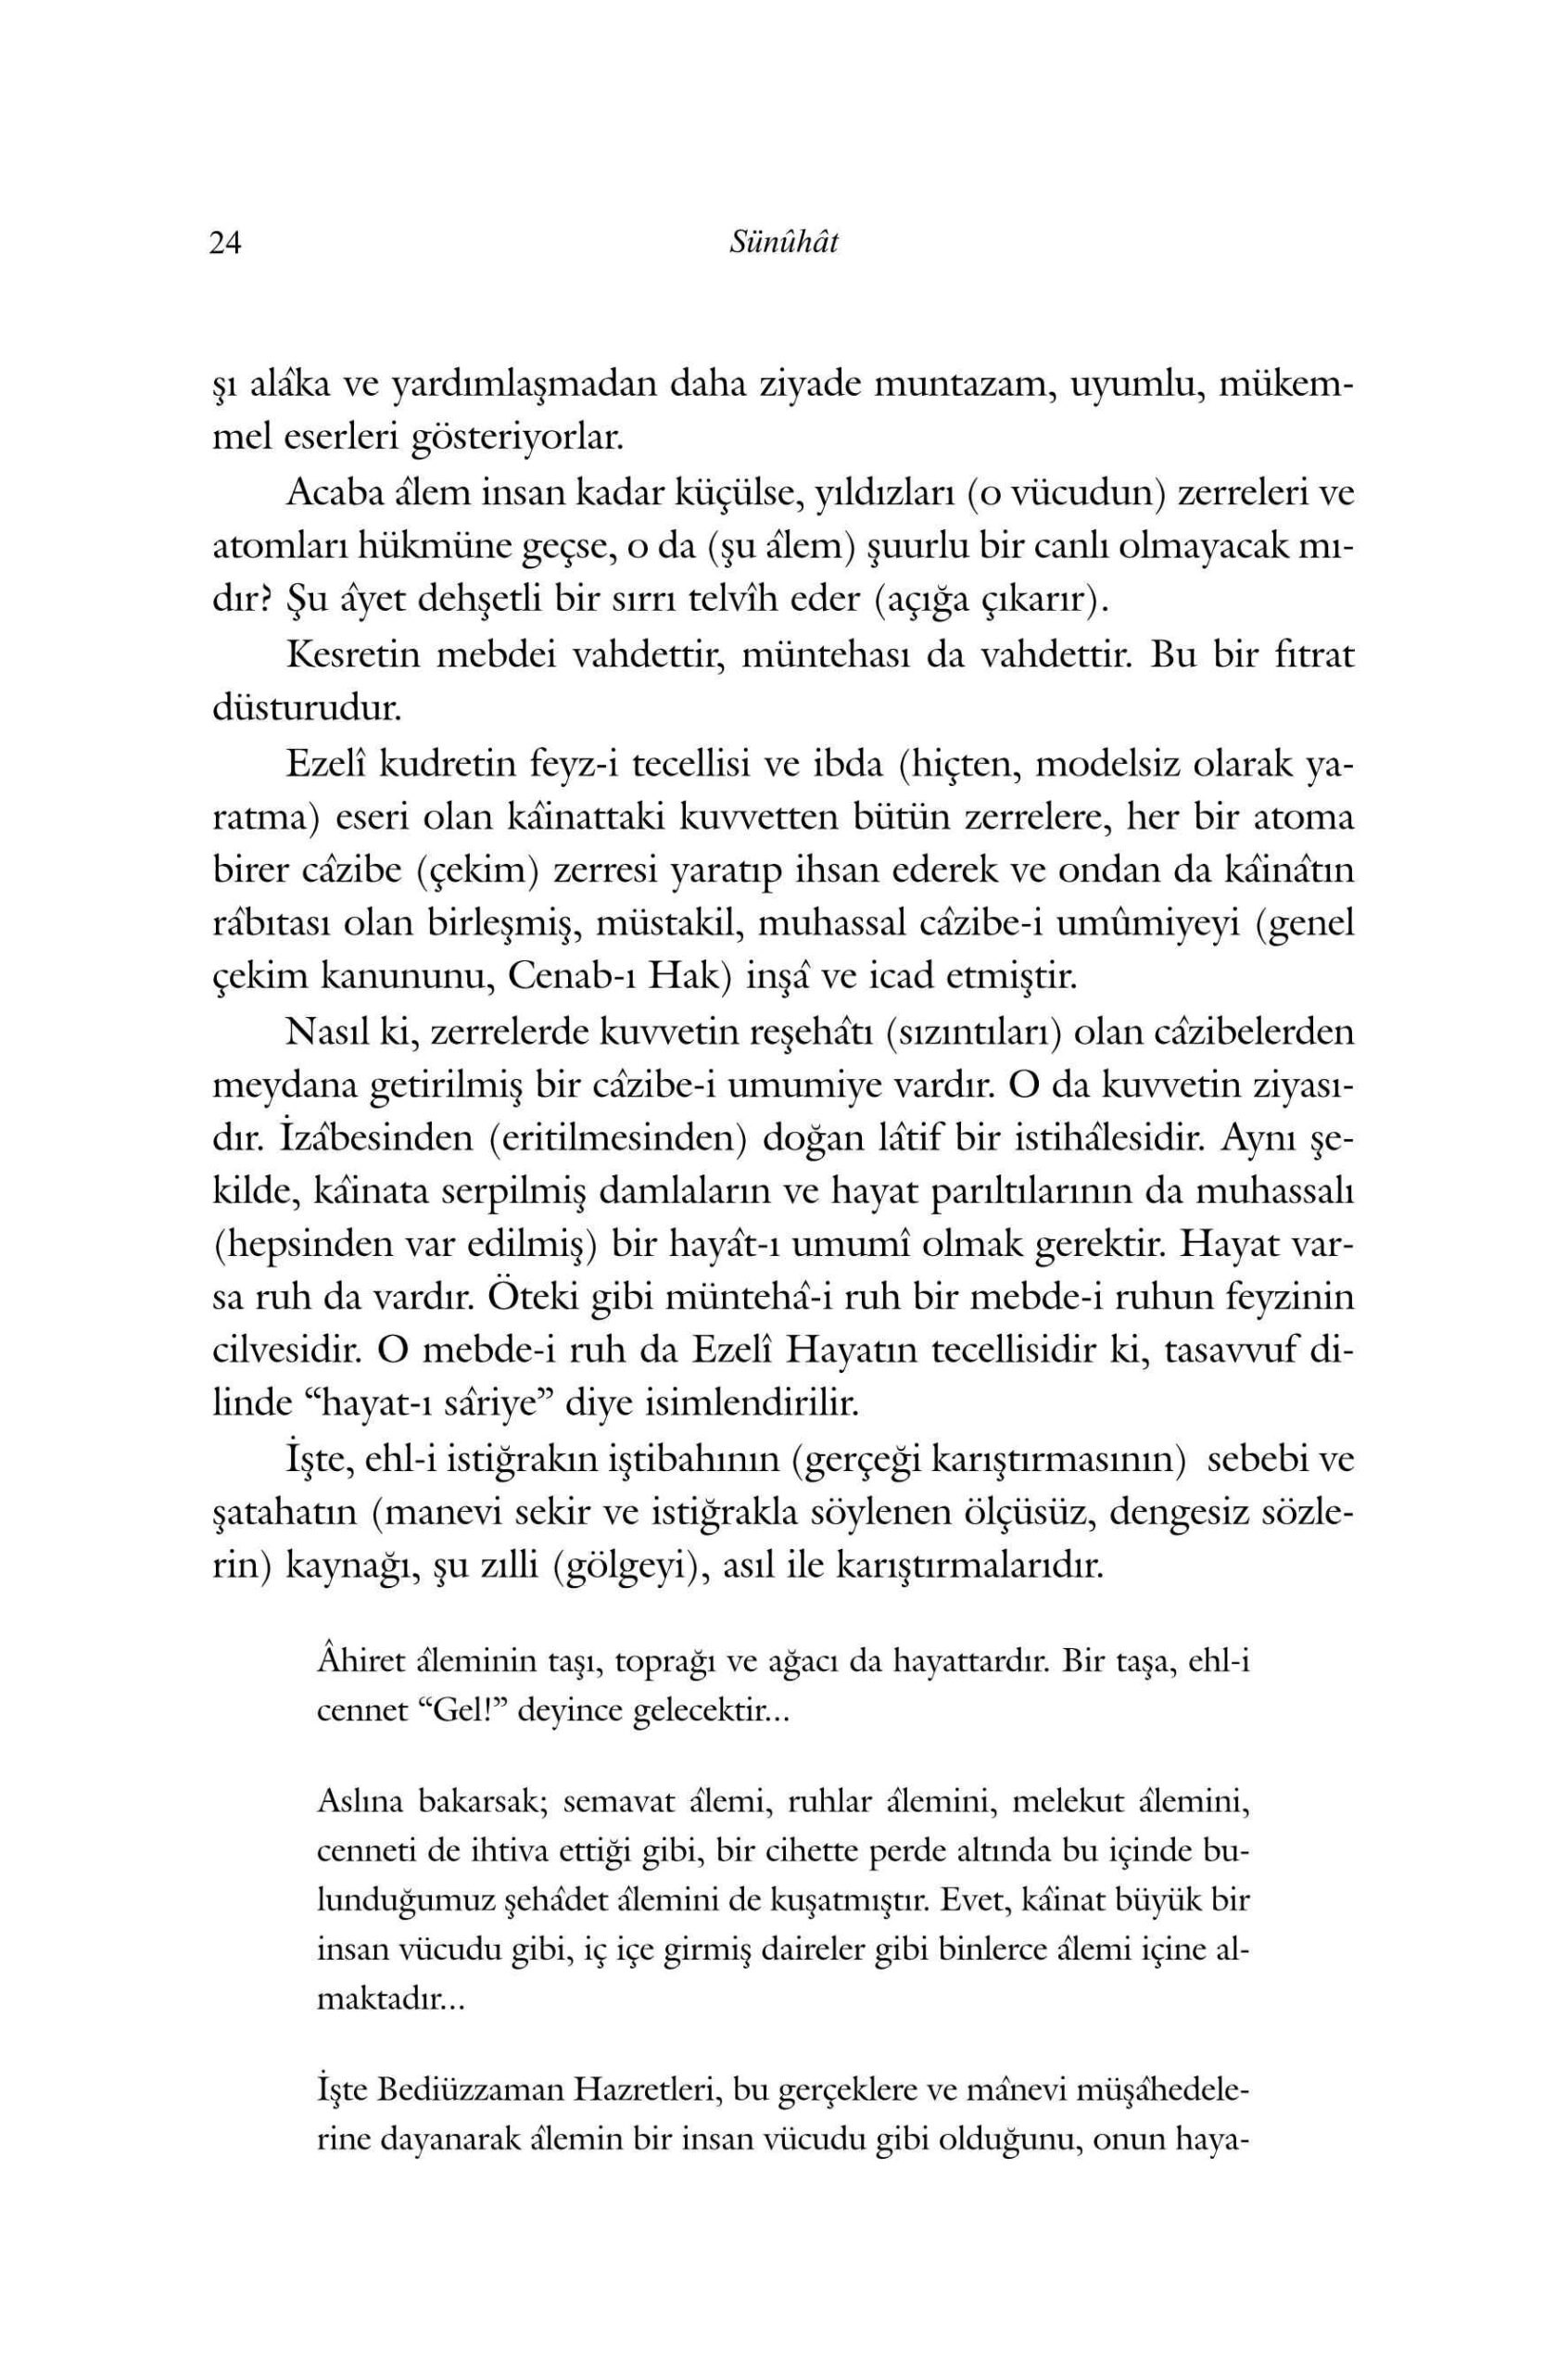 B Said Nursi - Abdullah Aymaz - Sunuhat Uzerine - SahdamarY.pdf, 91-Sayfa 